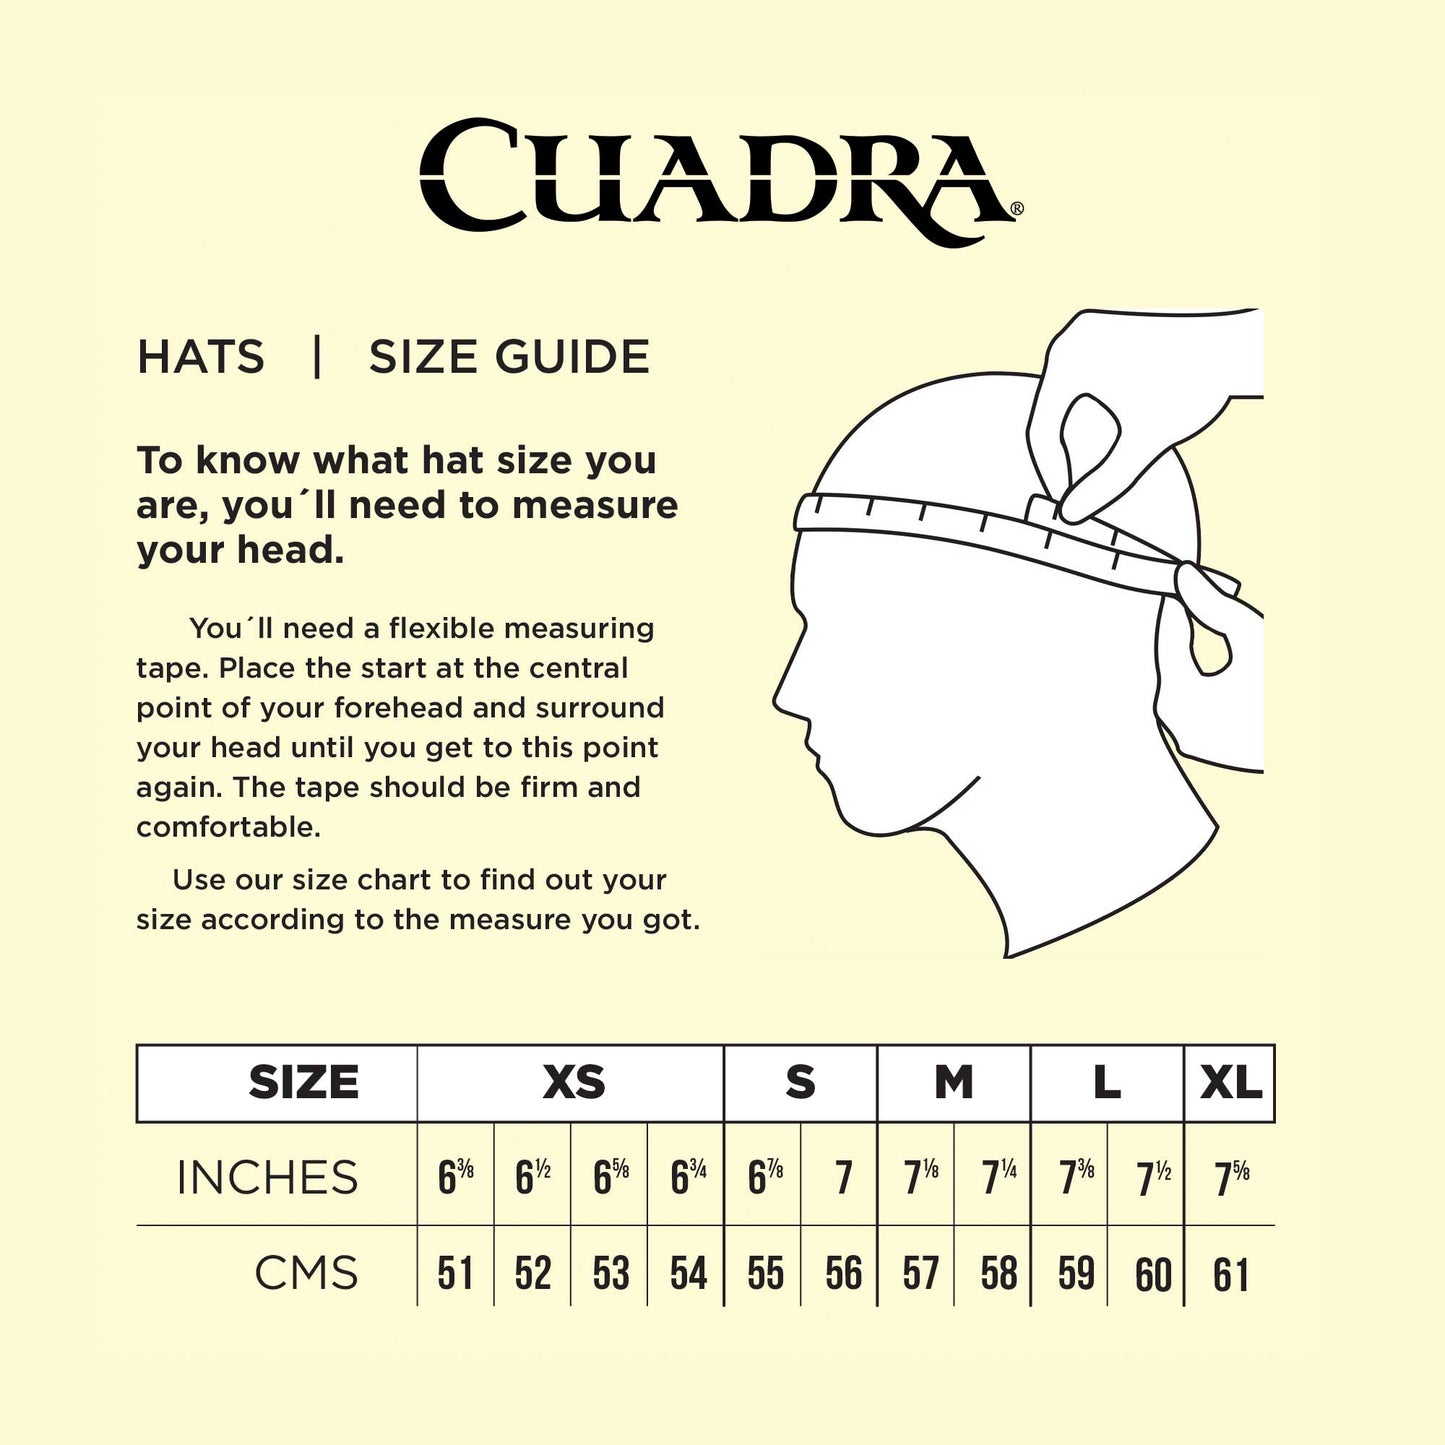 Cuadra's Hat's SizeGuide